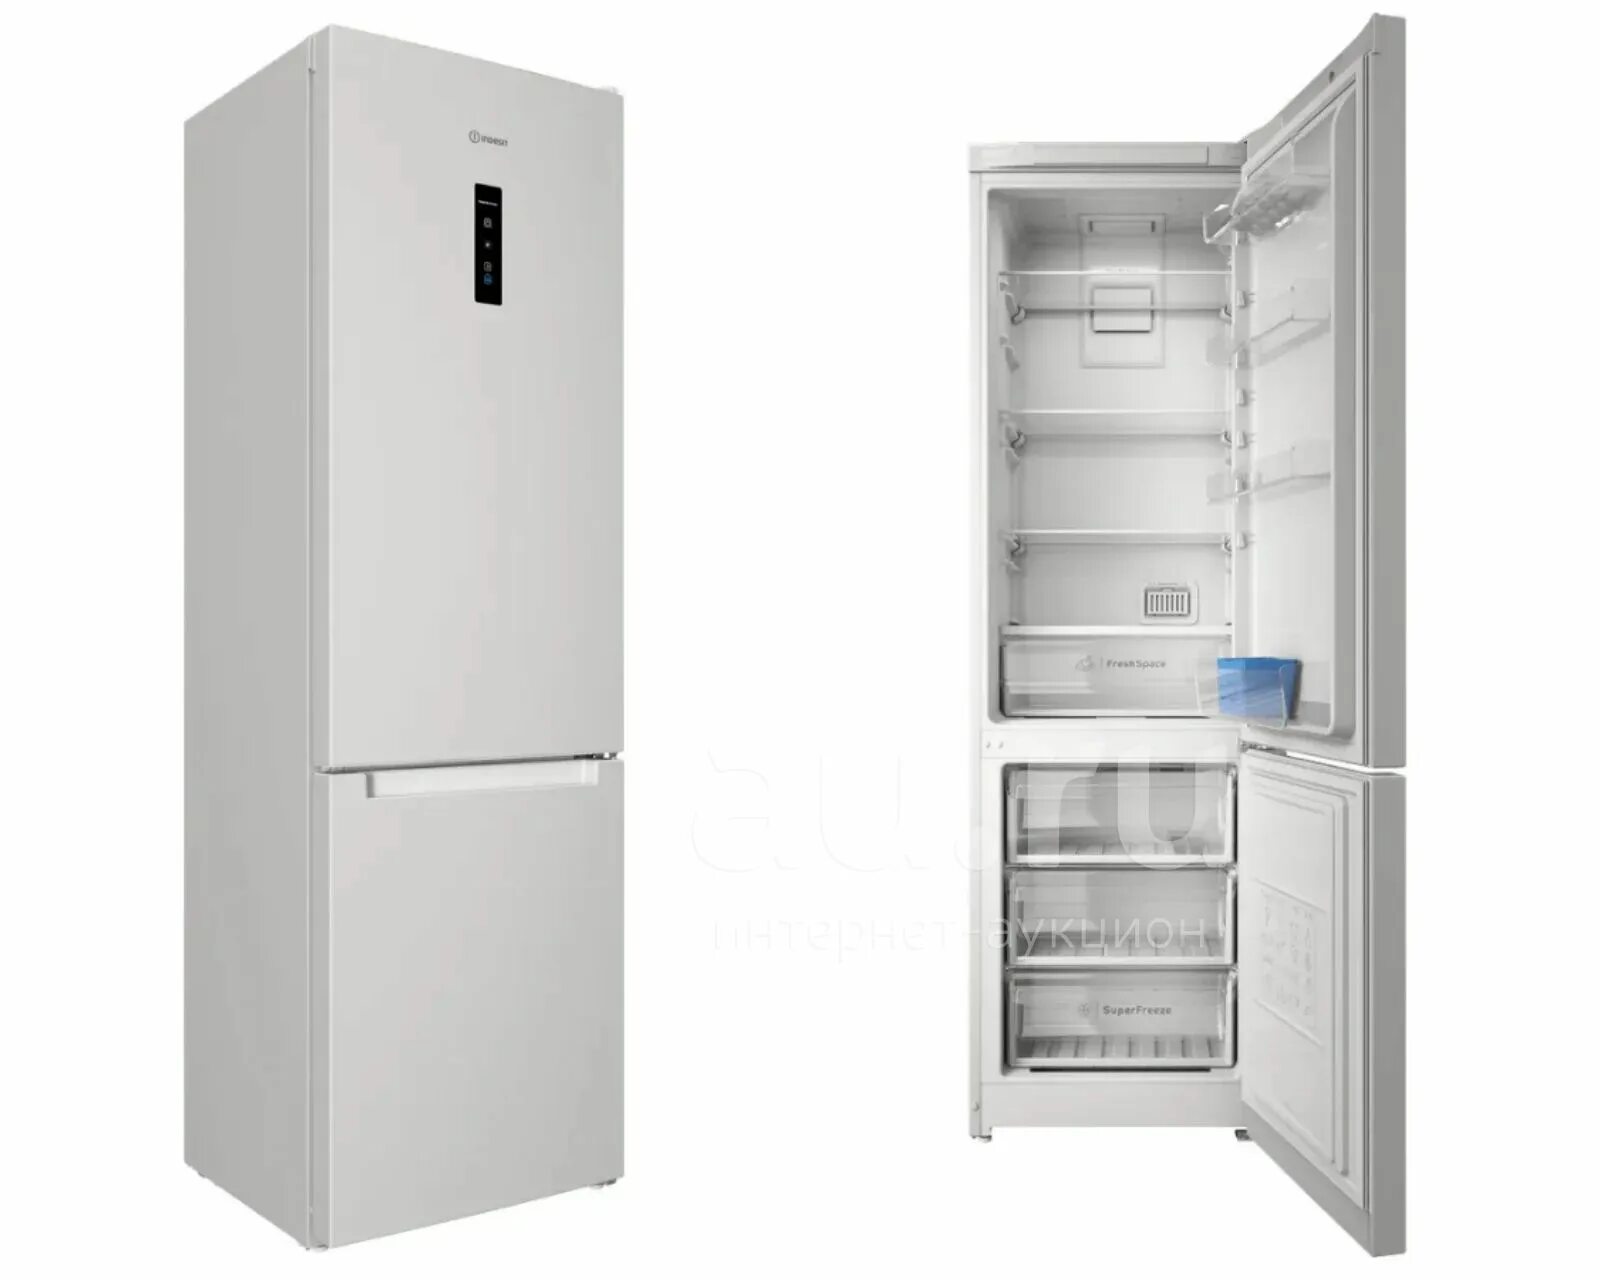 Индезит 5200w. Холодильник Индезит 5200w. Холодильник Индезит its 5200 w.